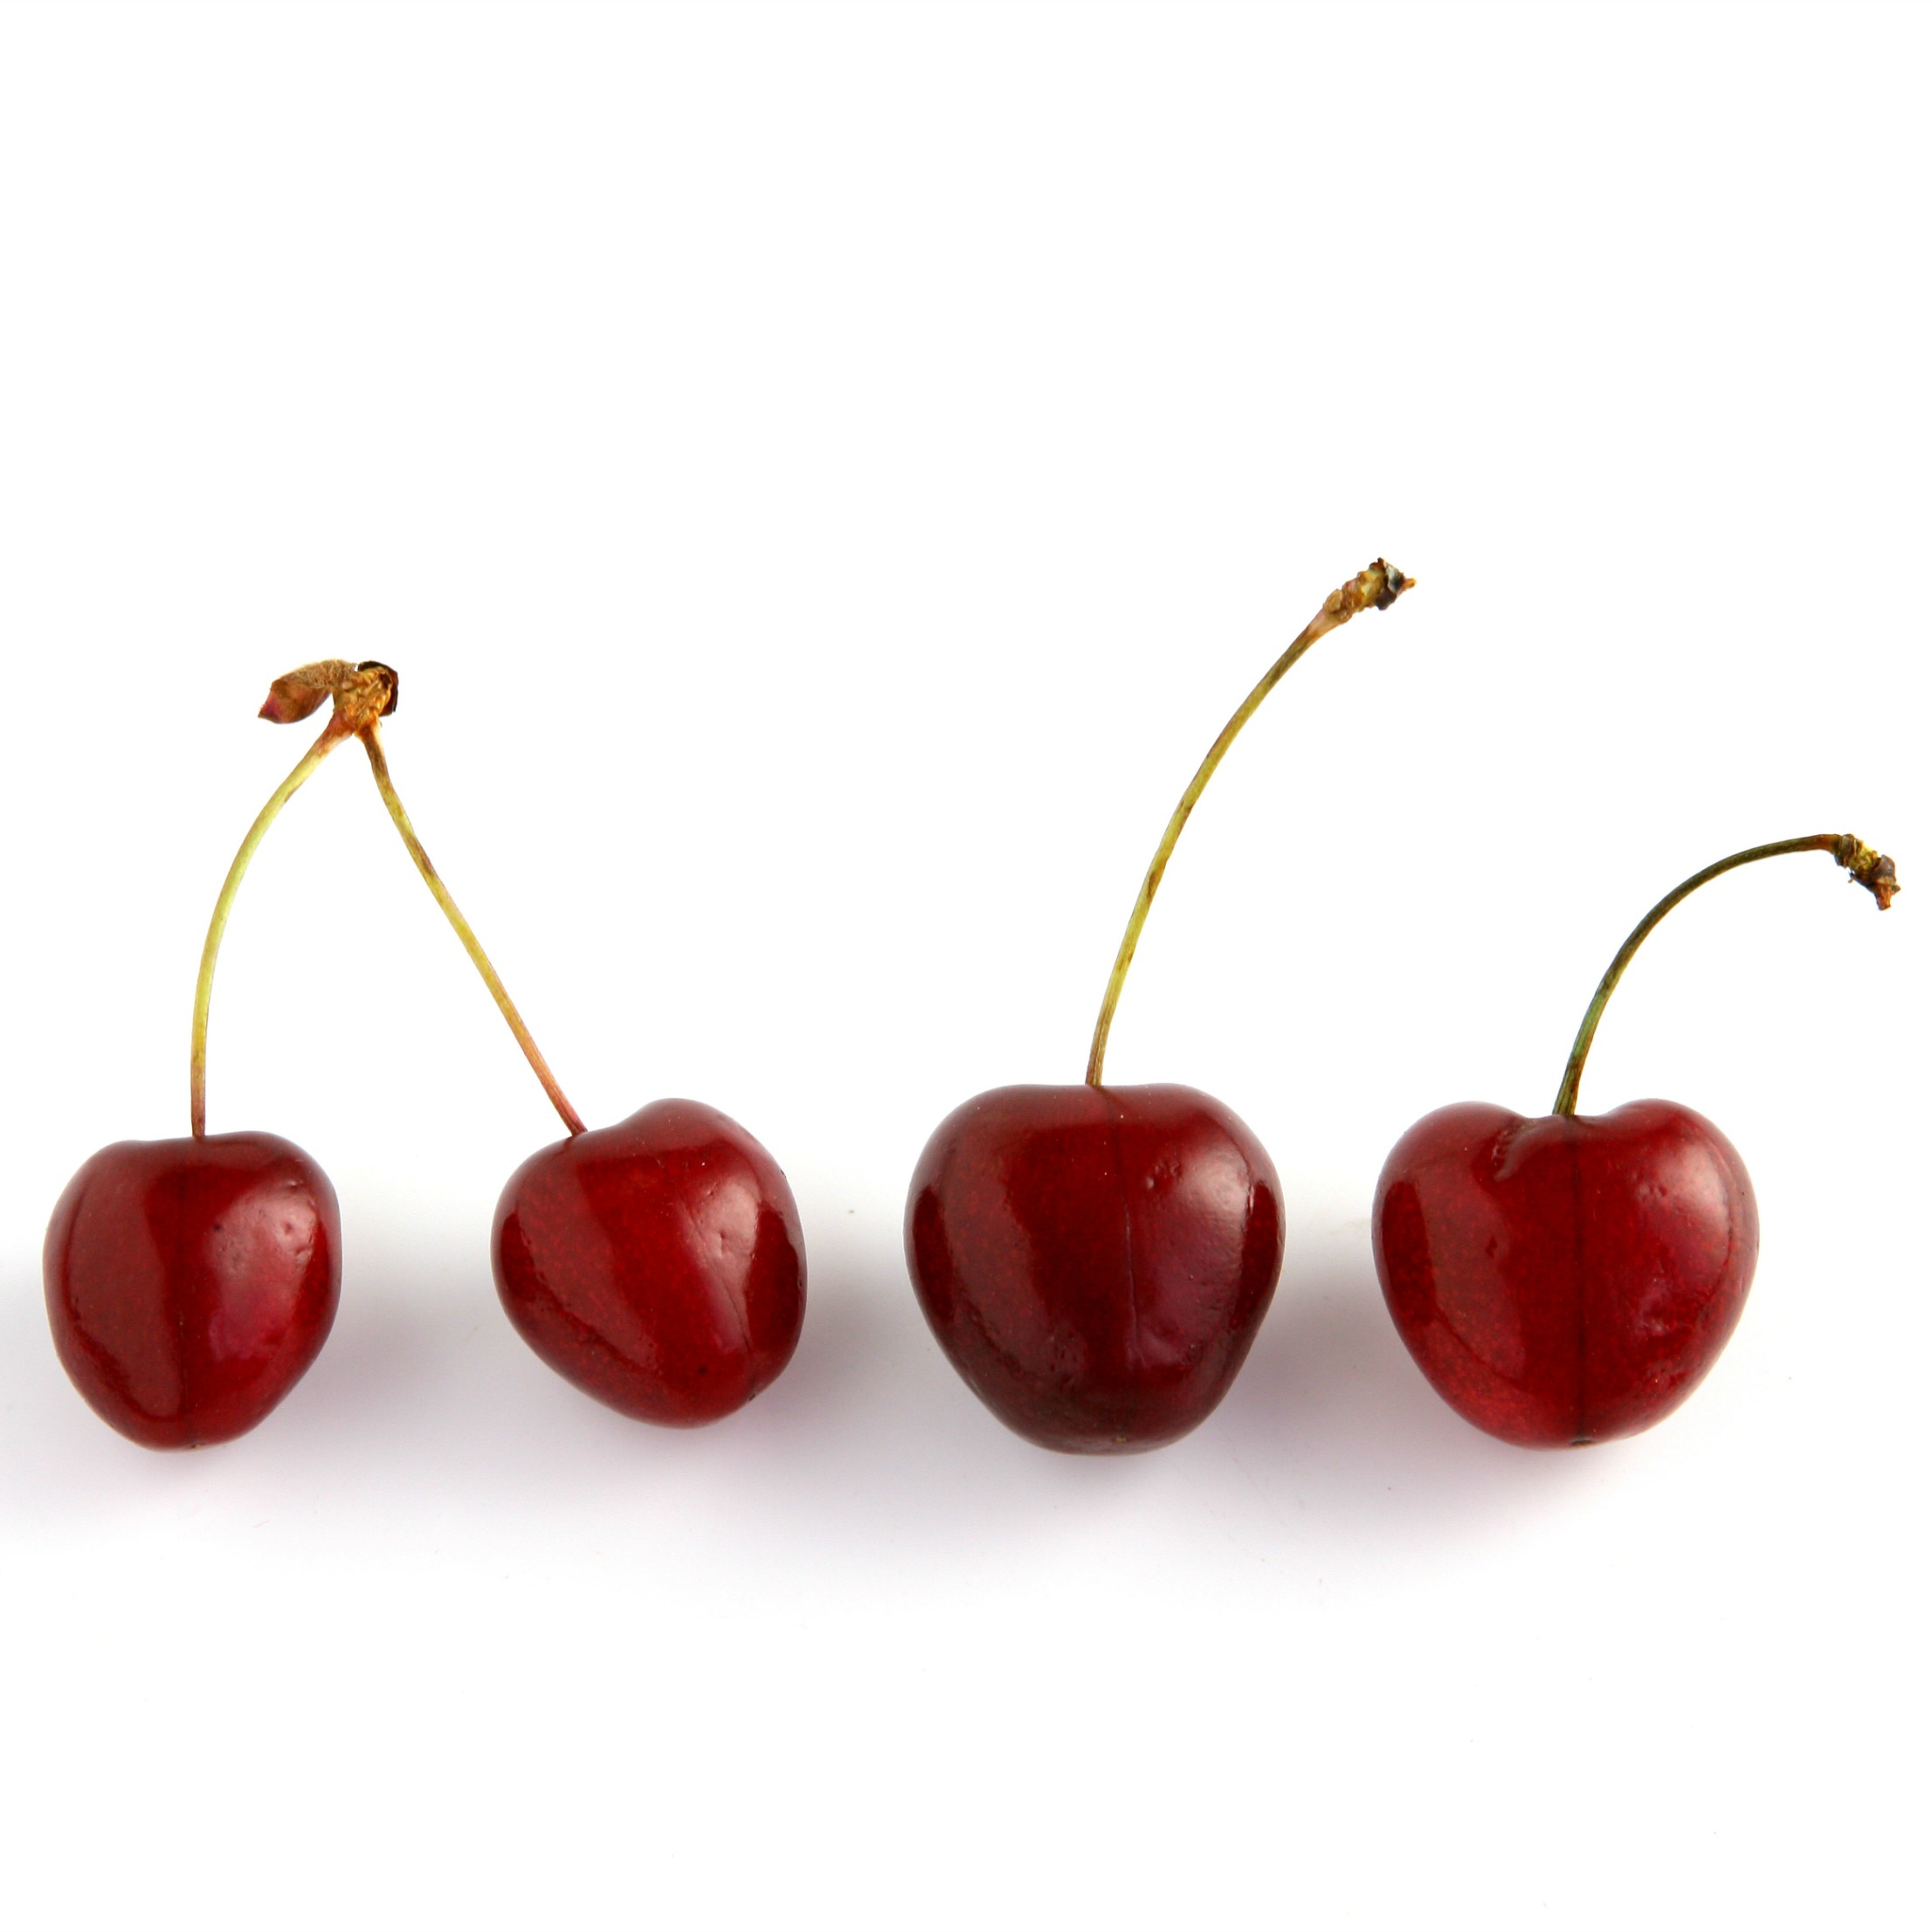 Four red, melatonin-boosting cherries that will help regulate your sleep cycle.